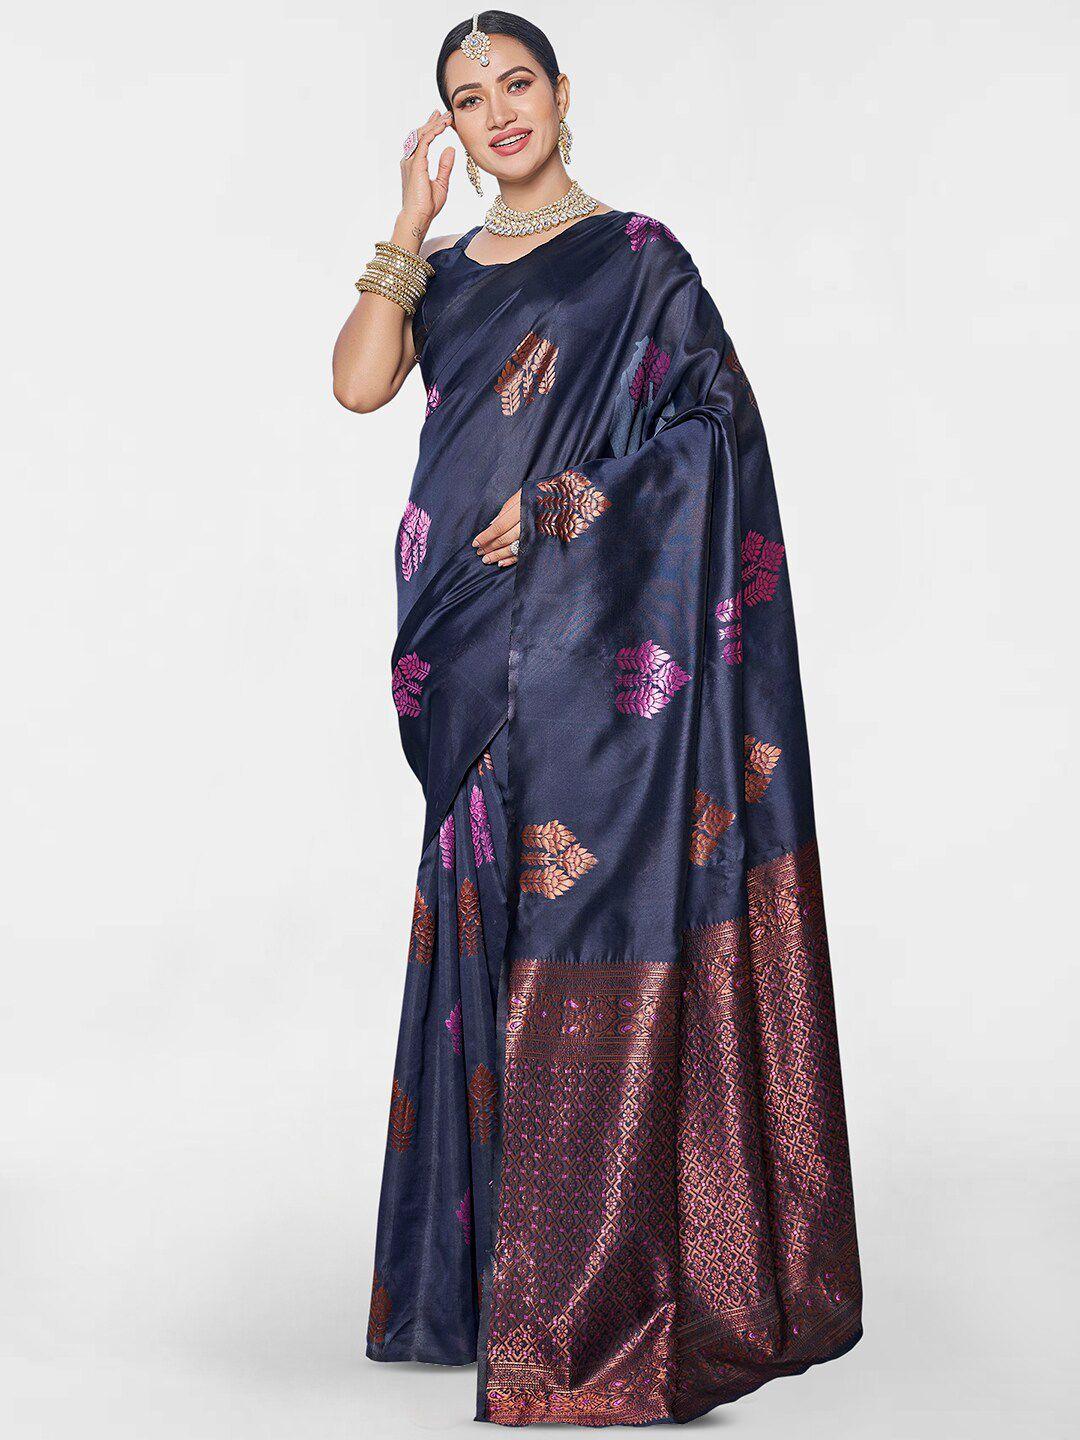 siril ethnic motifs woven design zari detailed saree